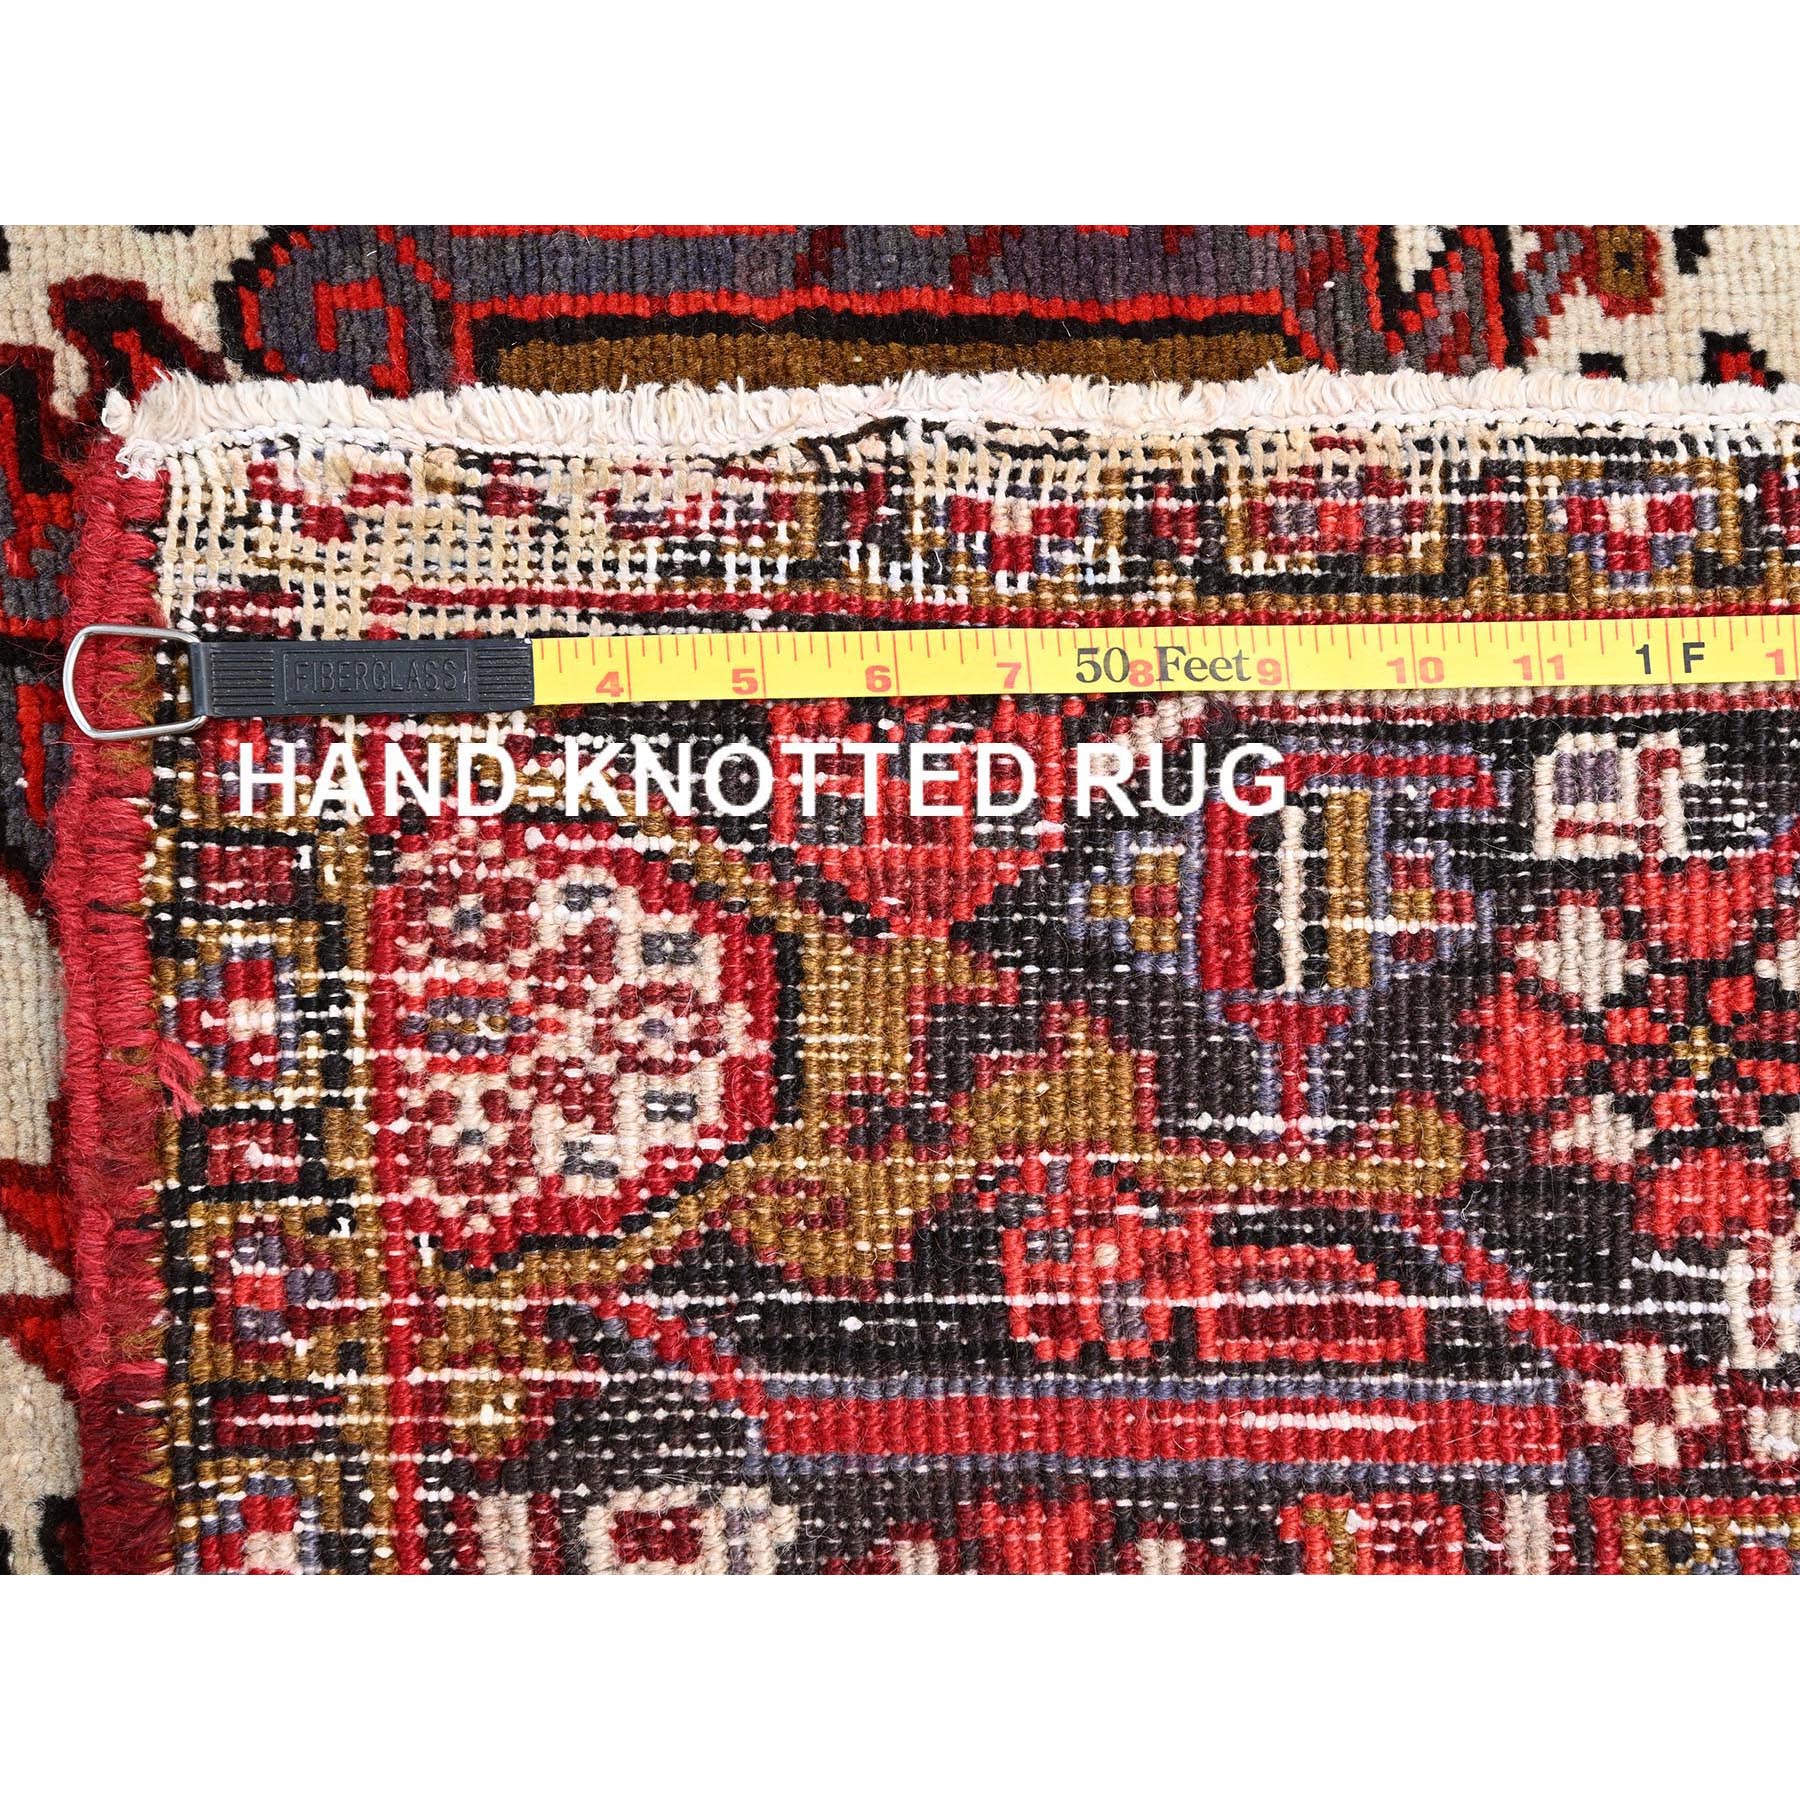 9'8"x13' Cardinals Red, Worn Wool, Hand Woven, Semi Antique Persian Heriz, Good Condition, Rustic Look, Oriental Rug 